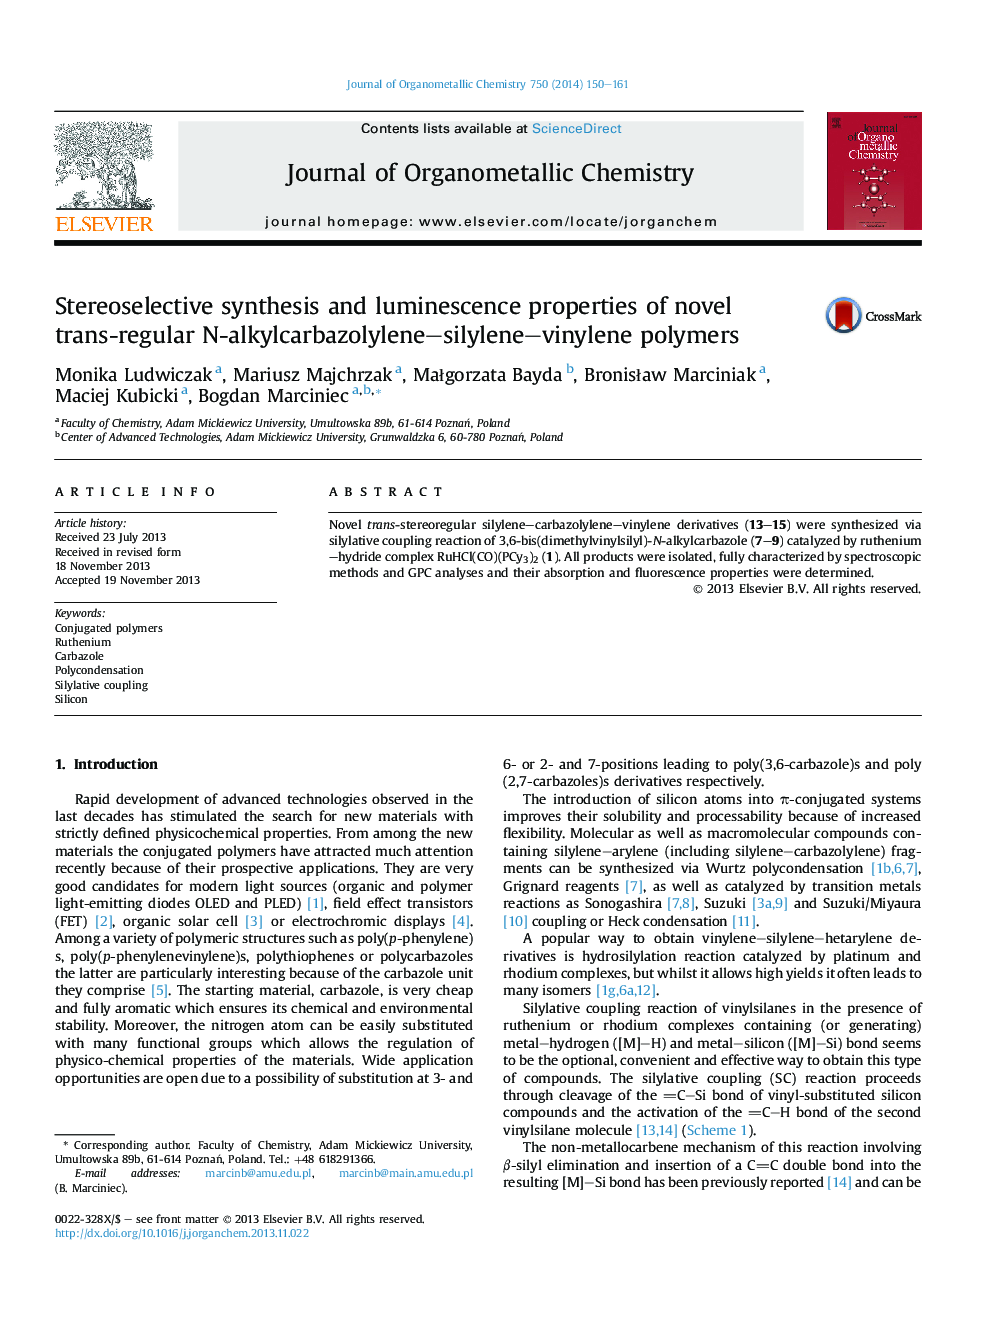 Stereoselective synthesis and luminescence properties of novel trans-regular N-alkylcarbazolylene–silylene–vinylene polymers